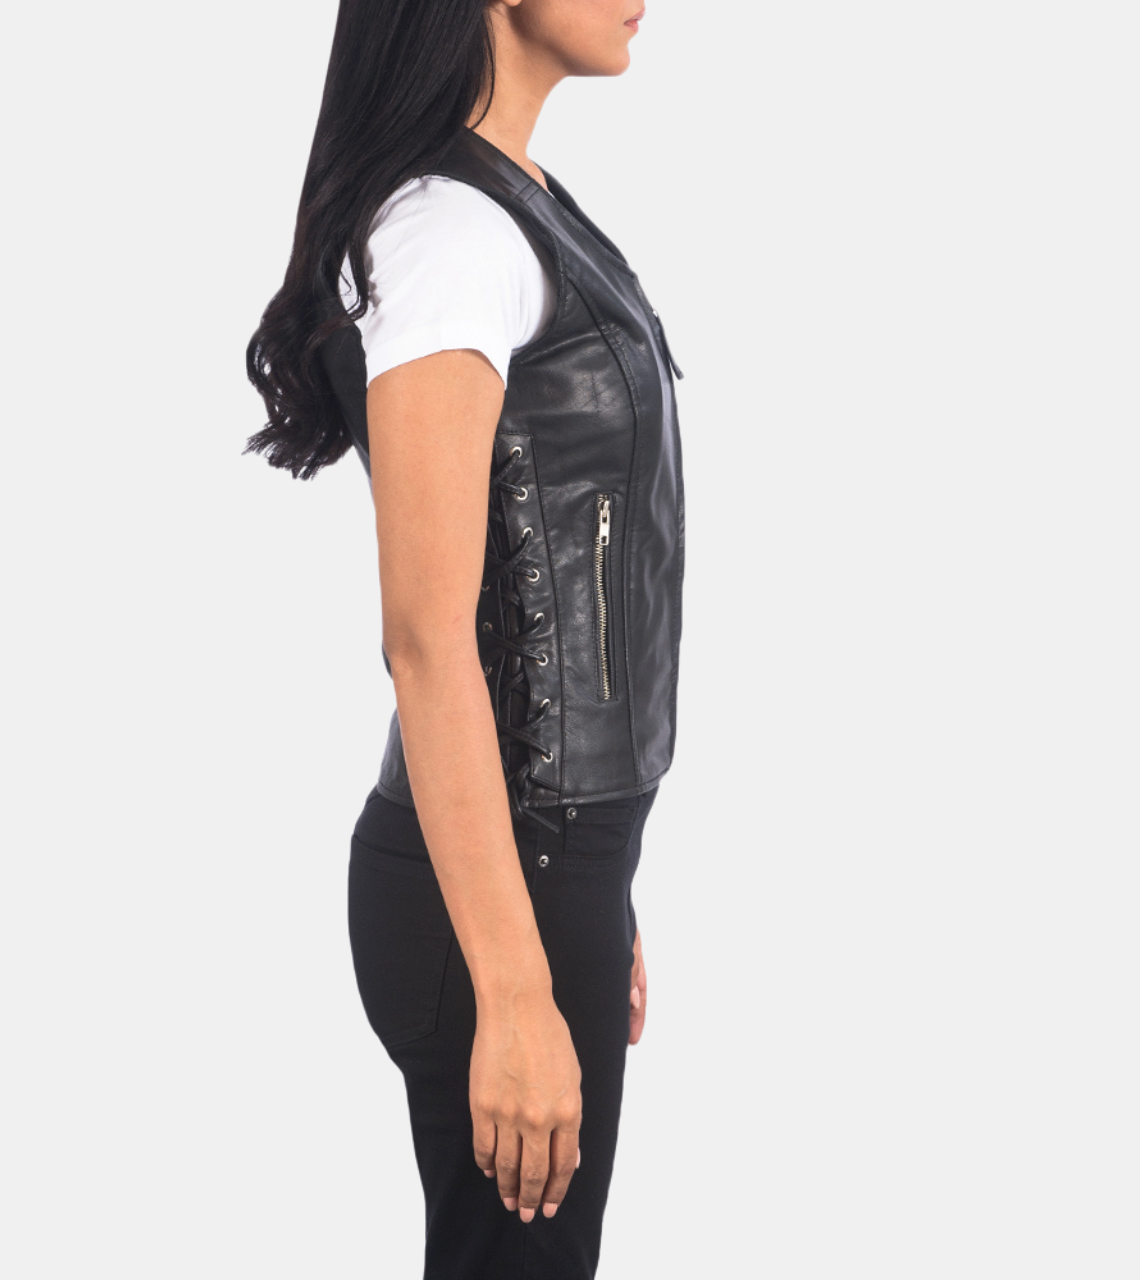 Idylla Black Leather Vest For Women's